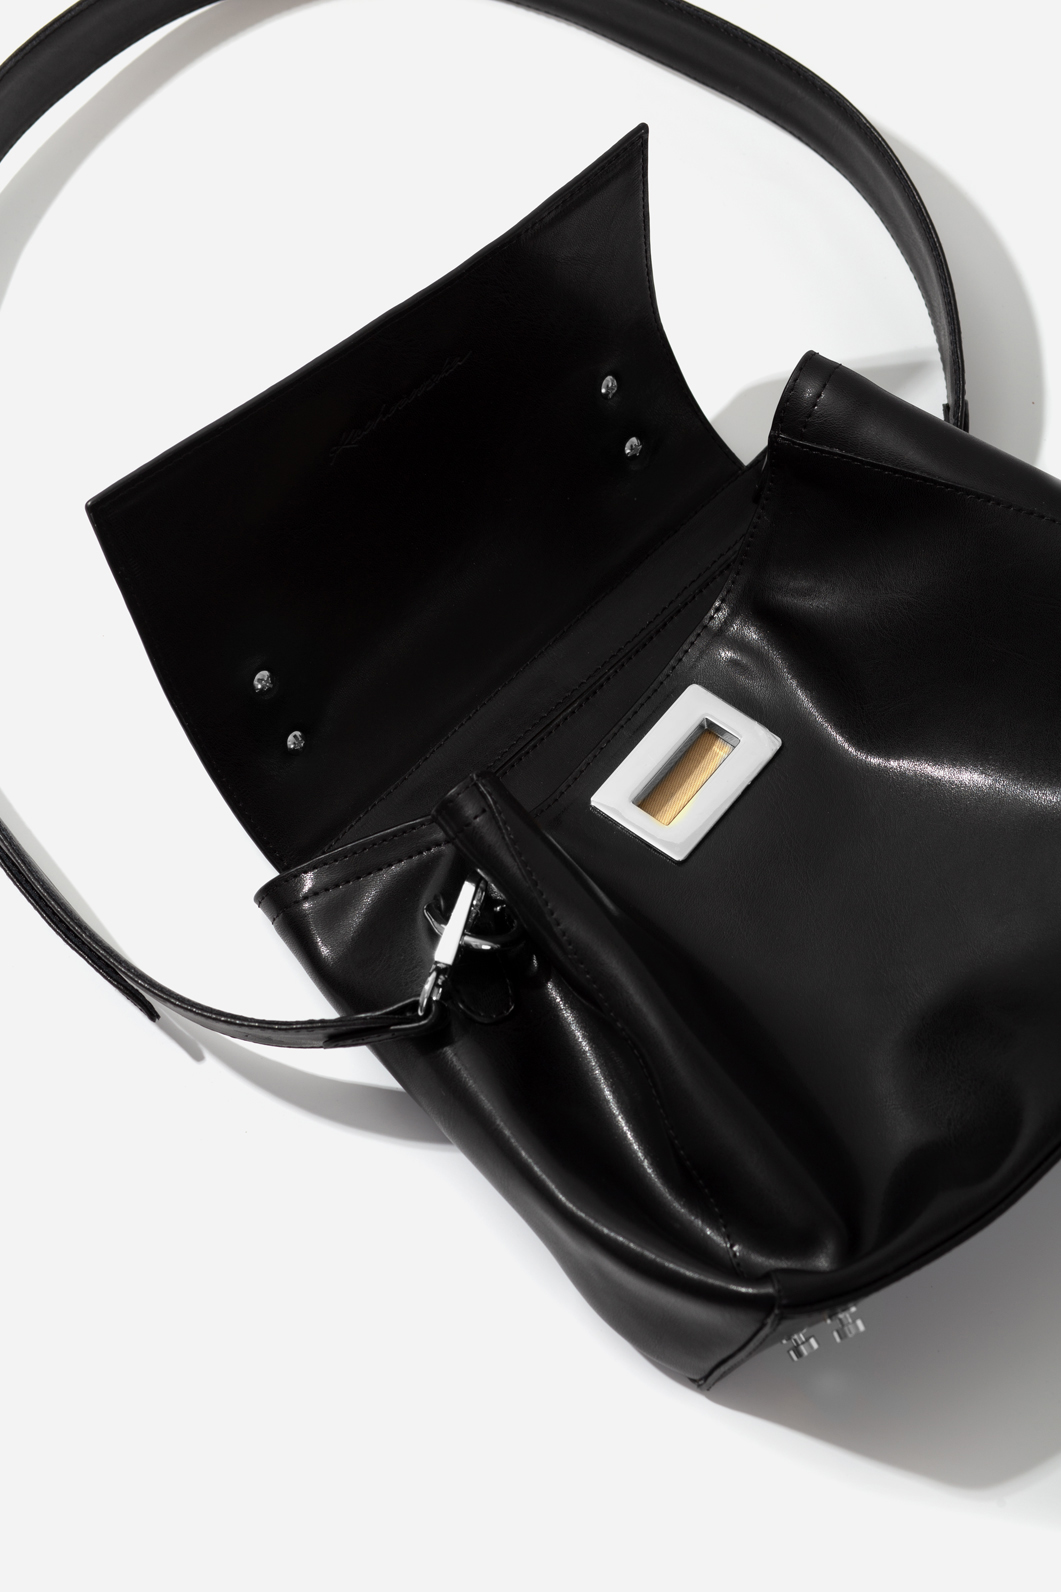 ERNA SOFT black bag /silver/